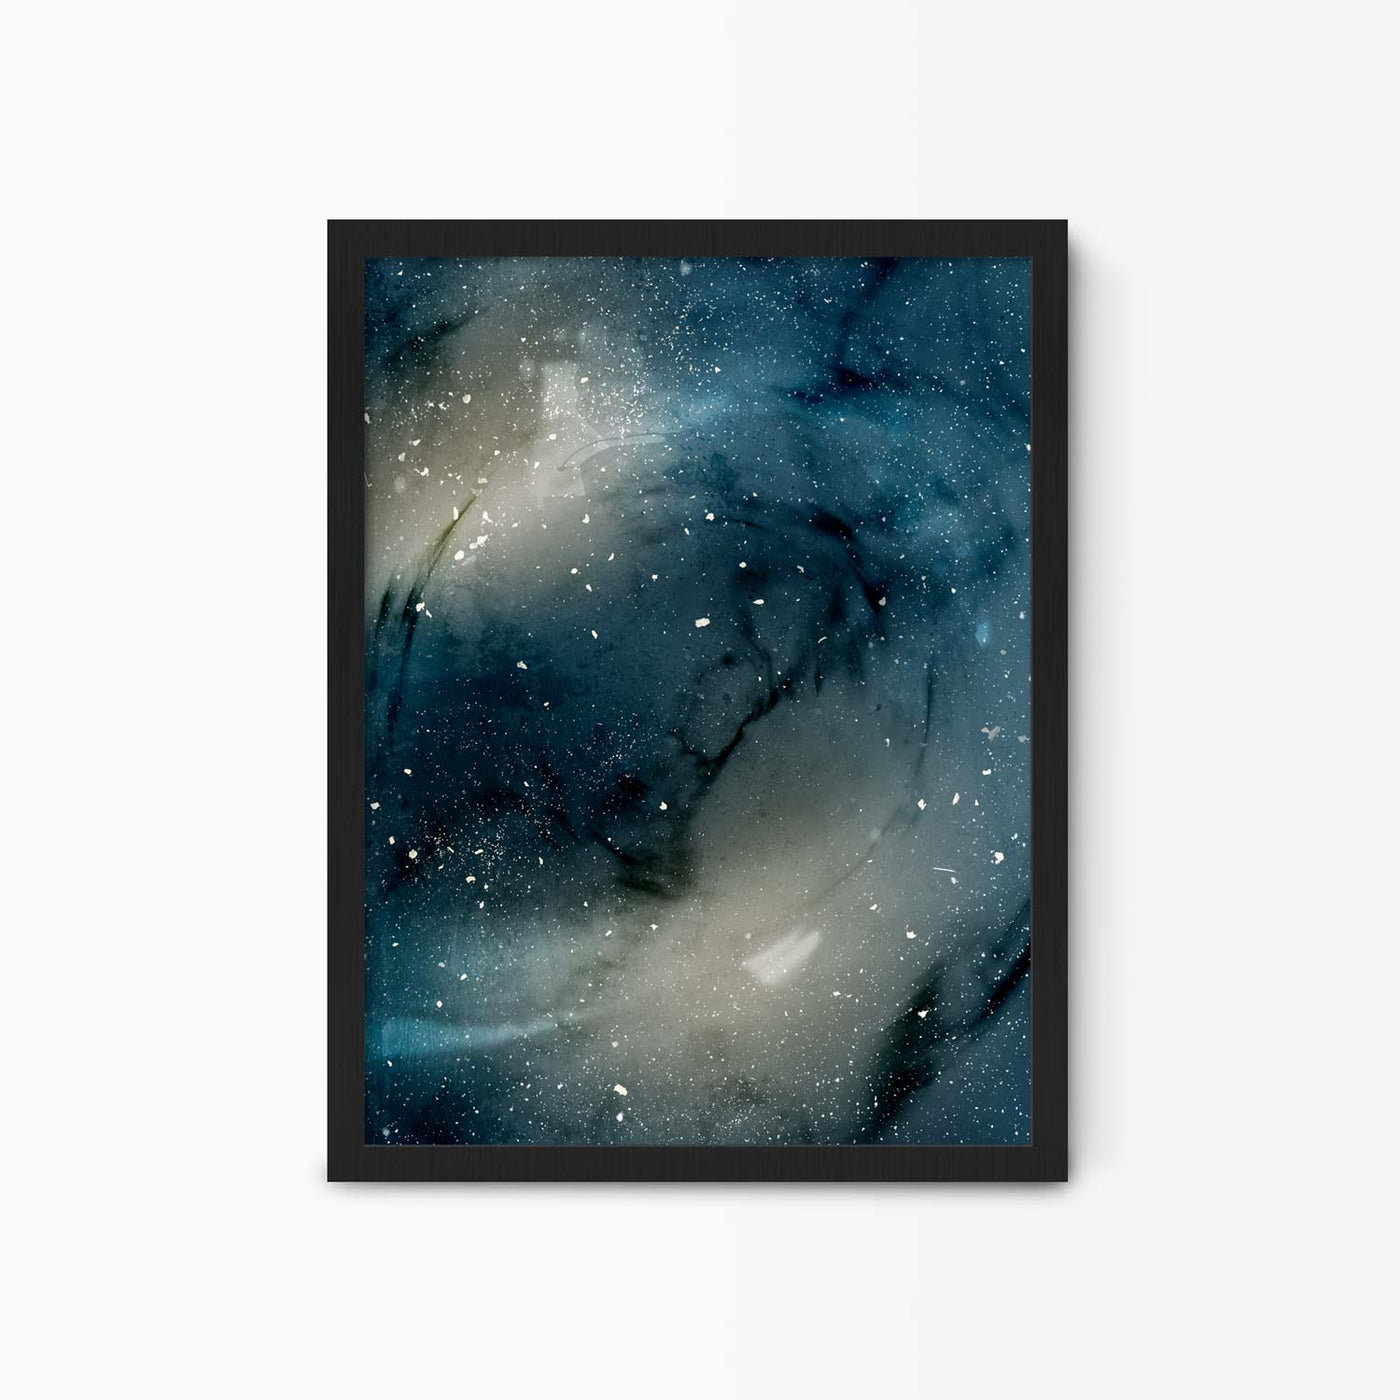 Green Lili 30x40cm (12x16") / Black Frame Outer Space Print